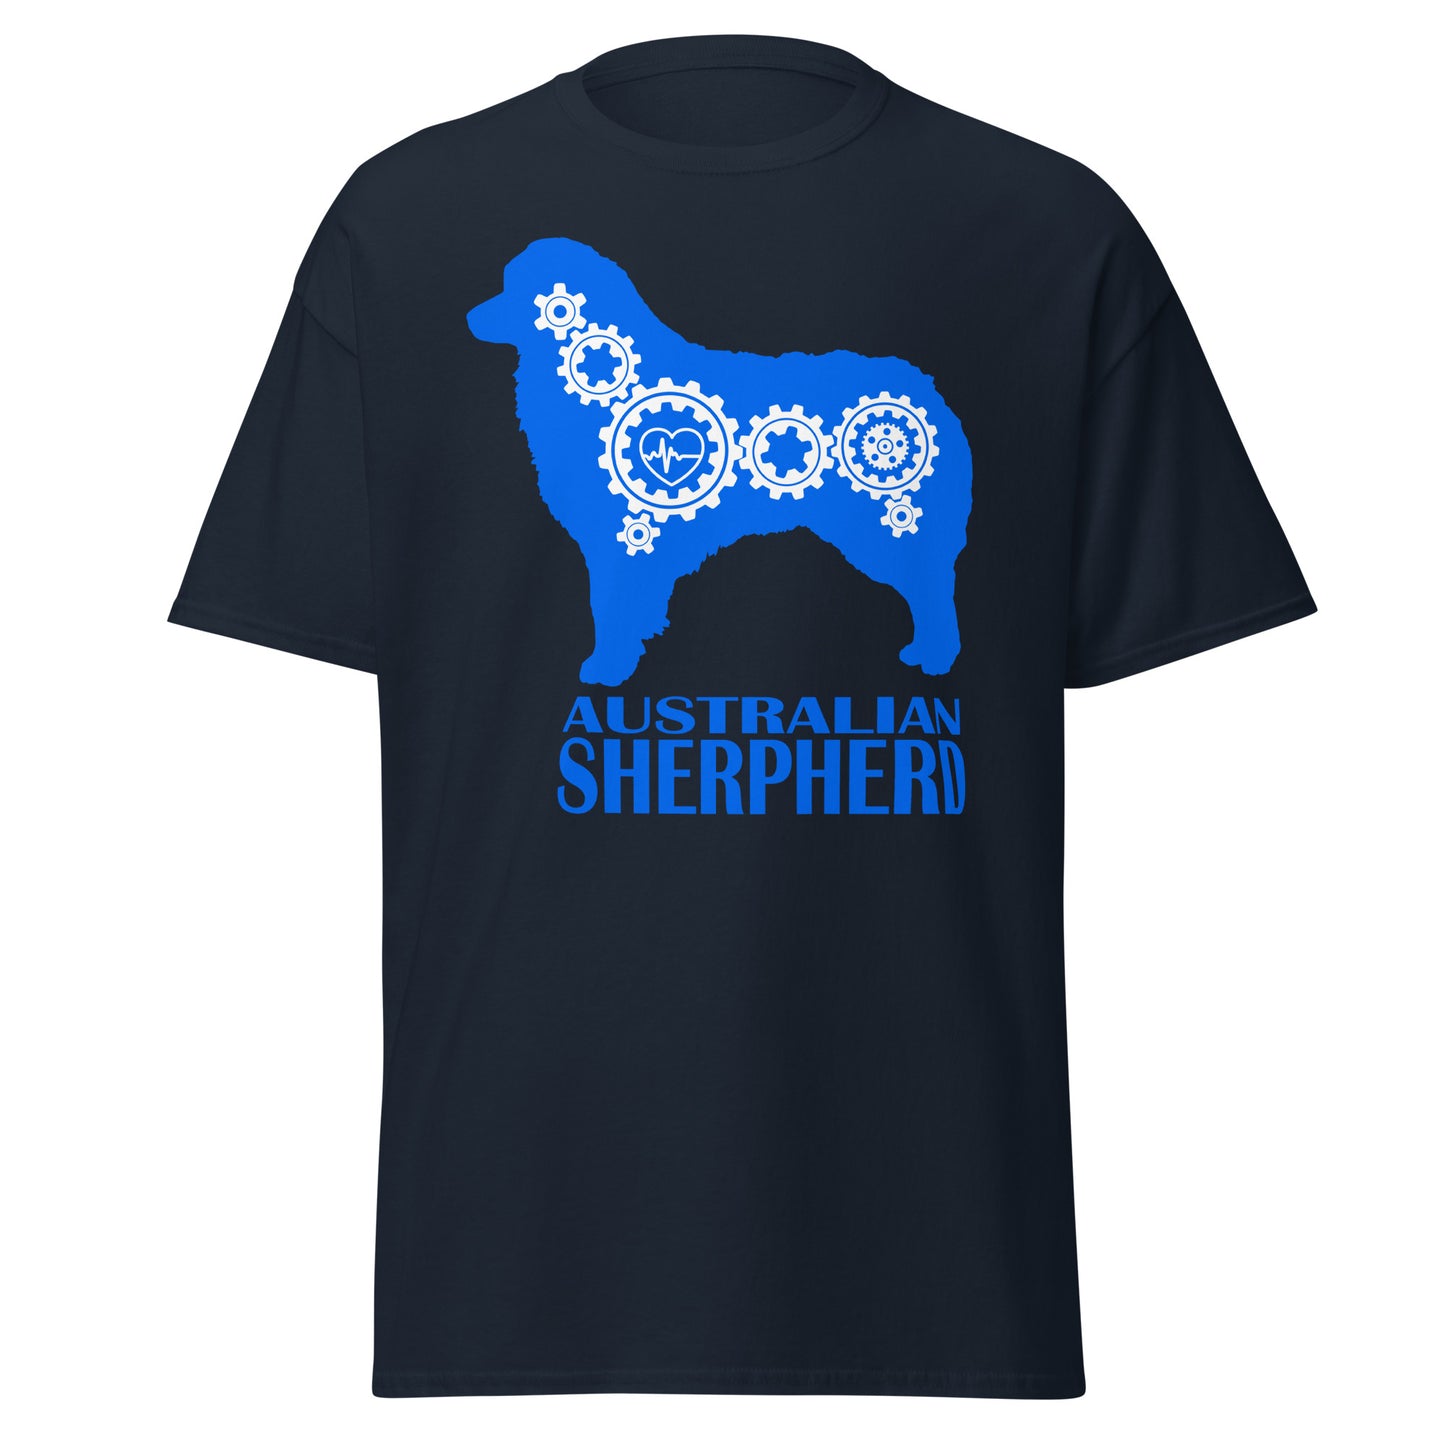 Australian Shepherd Bionic men’s navy t-shirt by Dog Artistry.